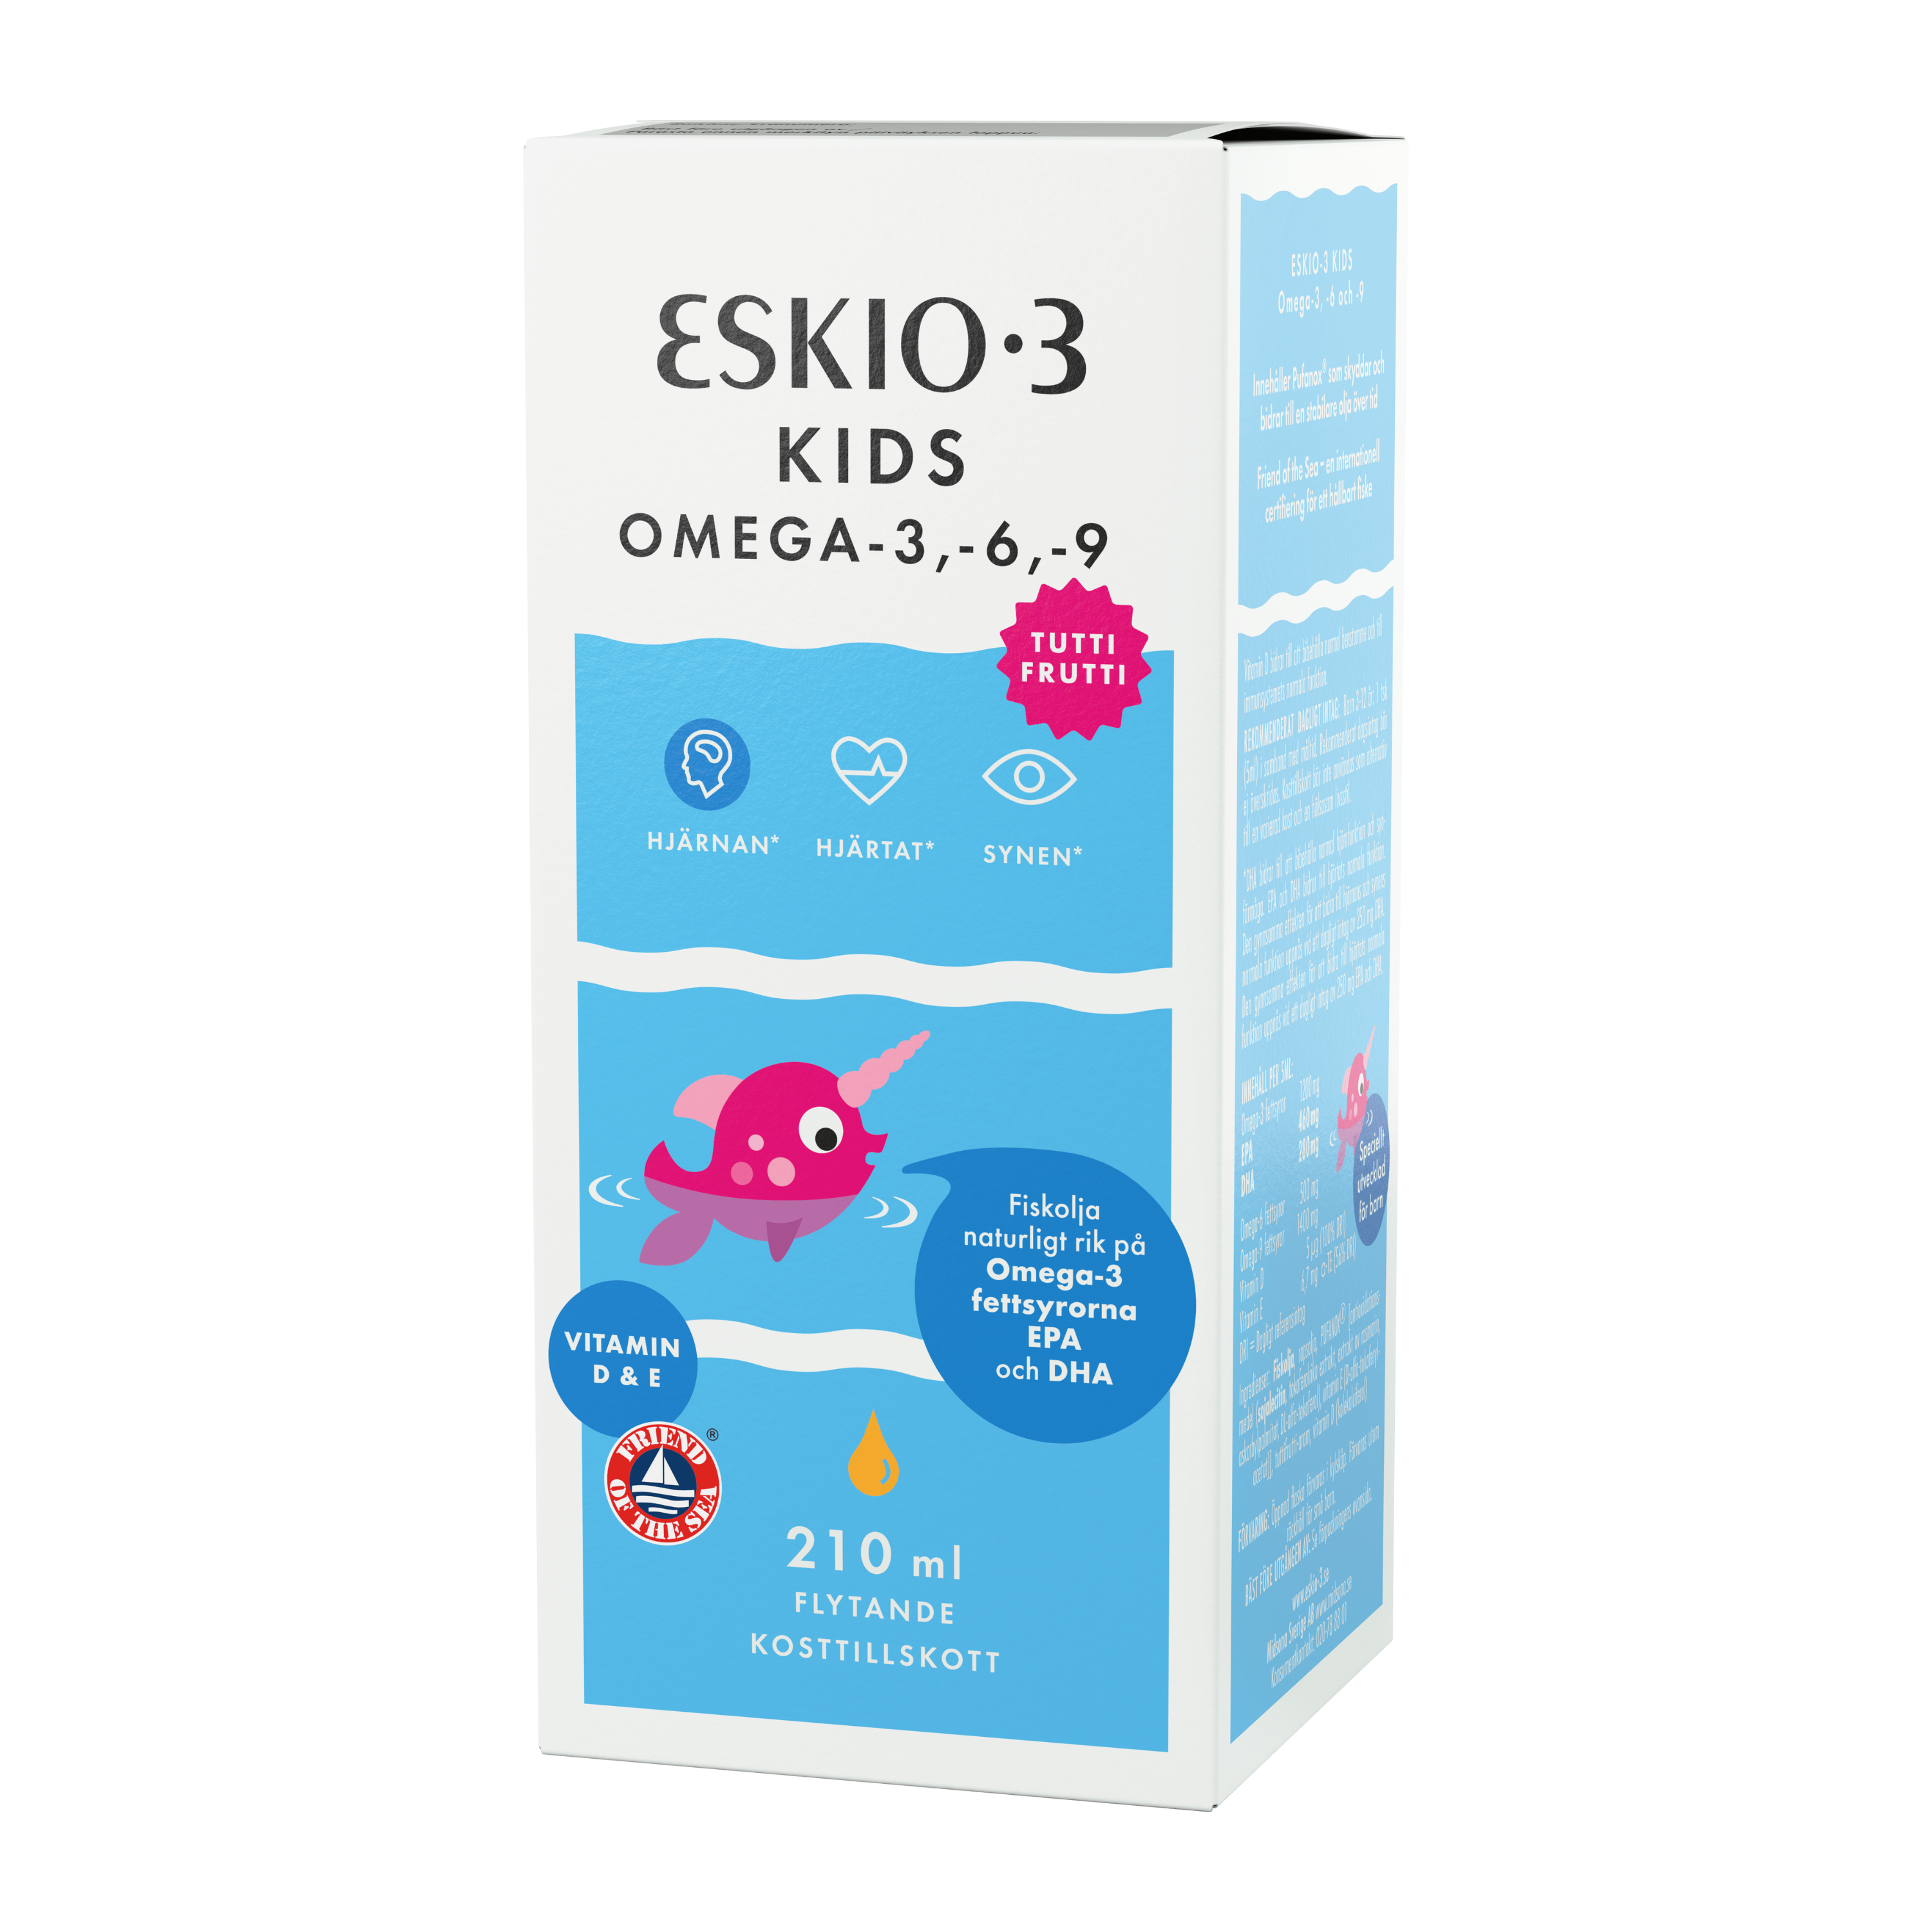 Eskio-3 Kids Tuttifrutti 210ml